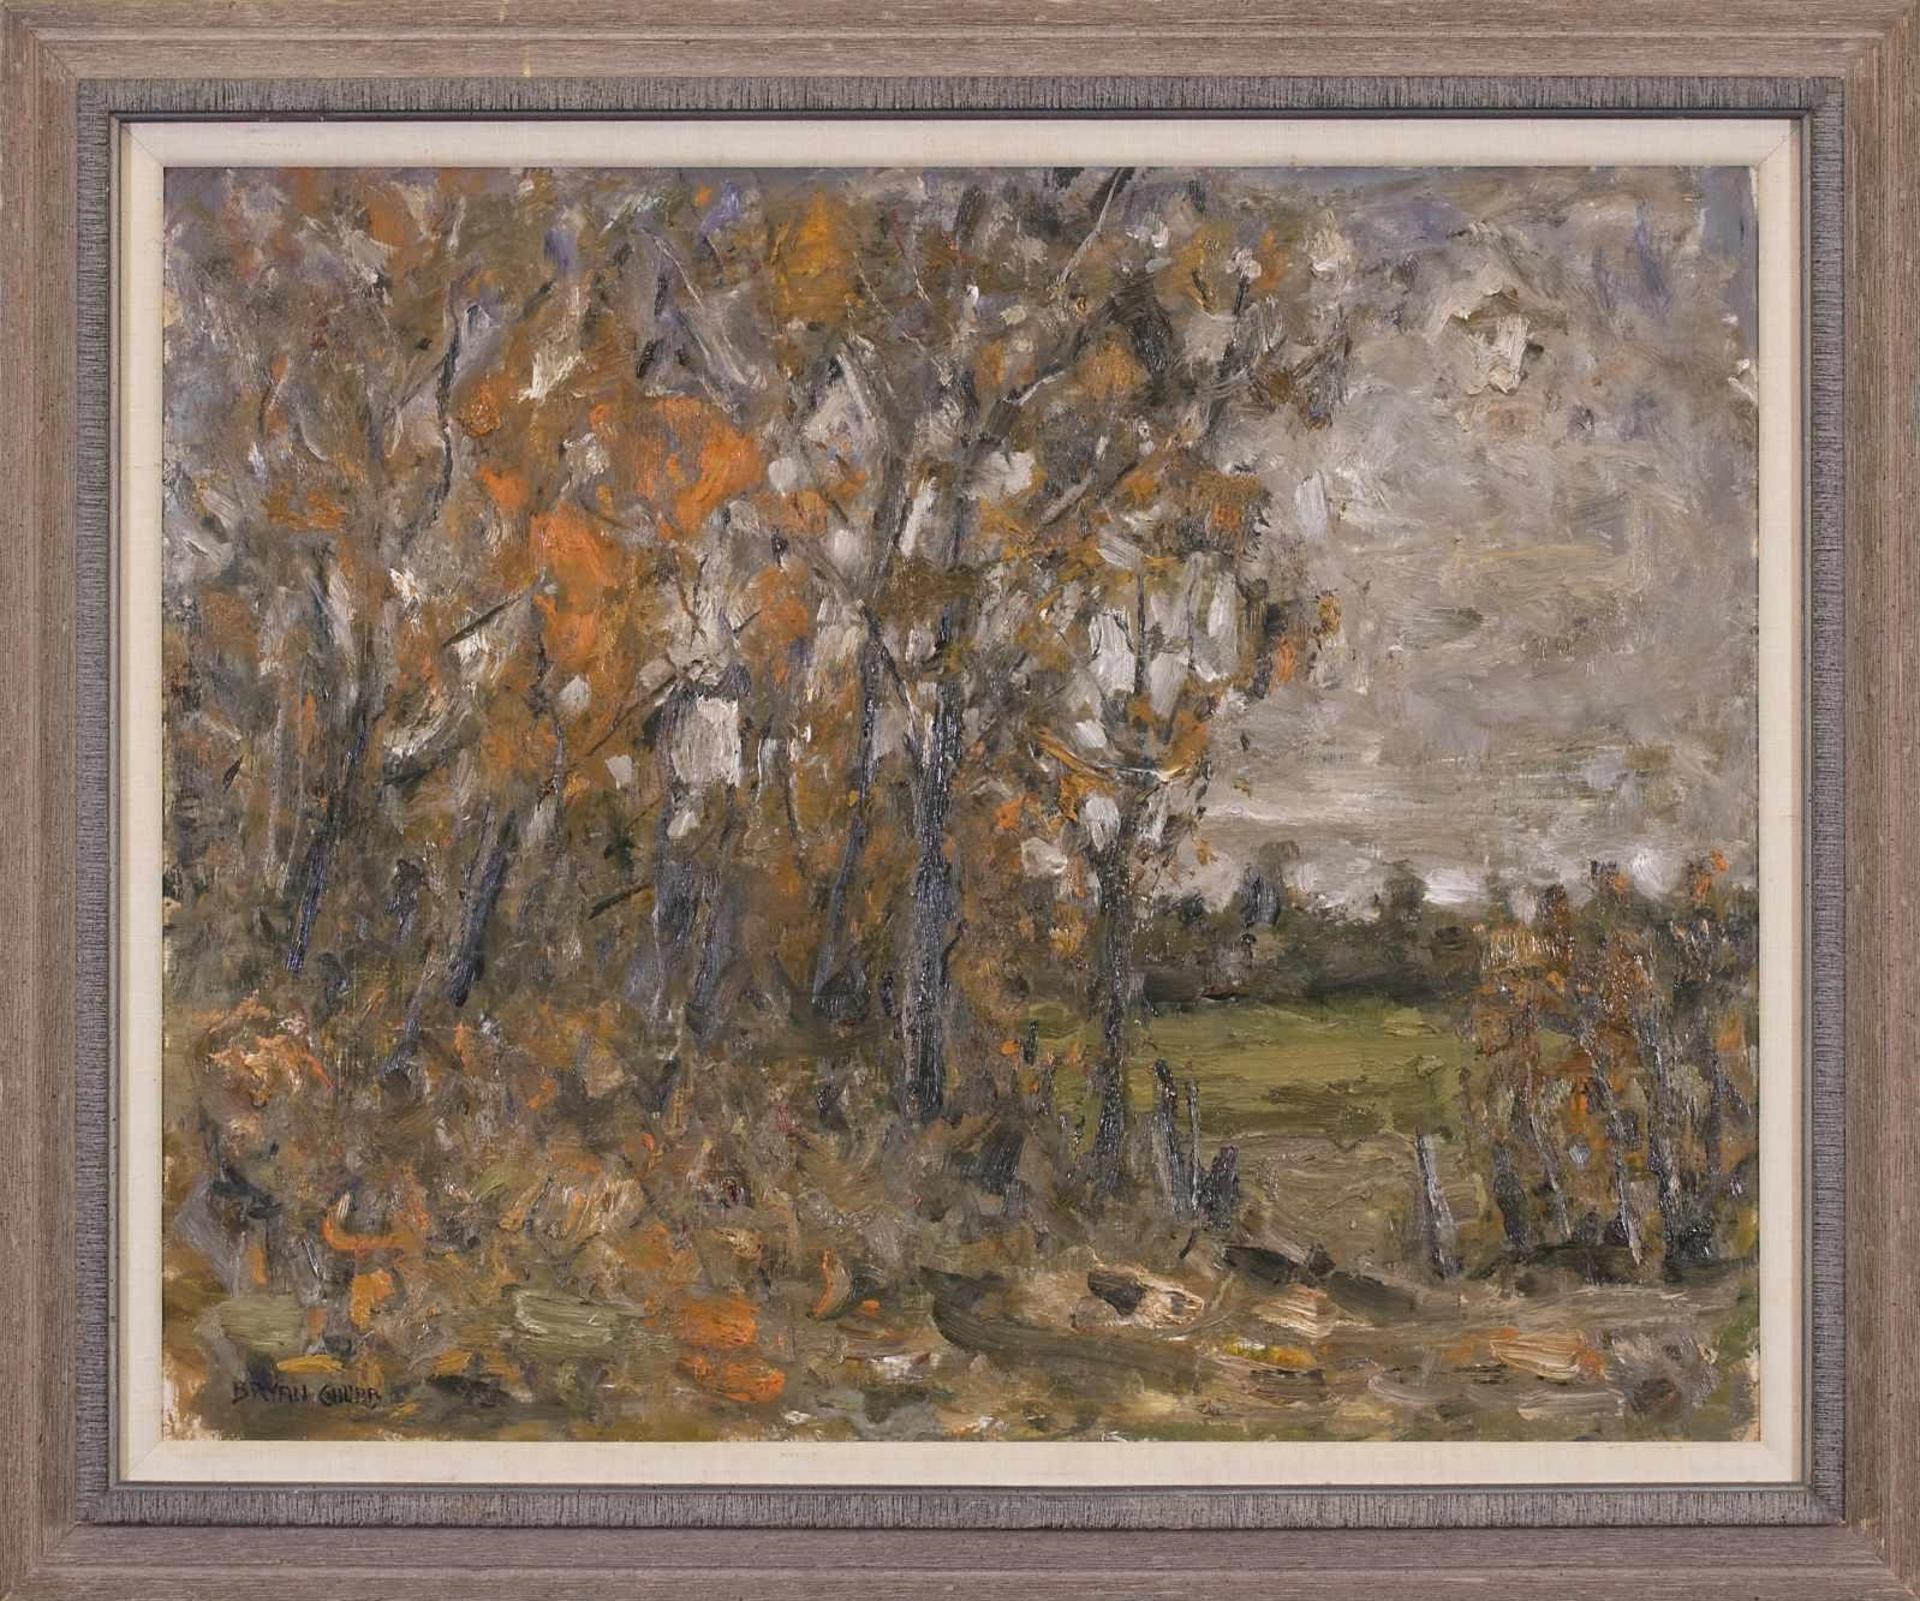 Bryan Chubb (1947) - Autumn Landscape, Nanaimo